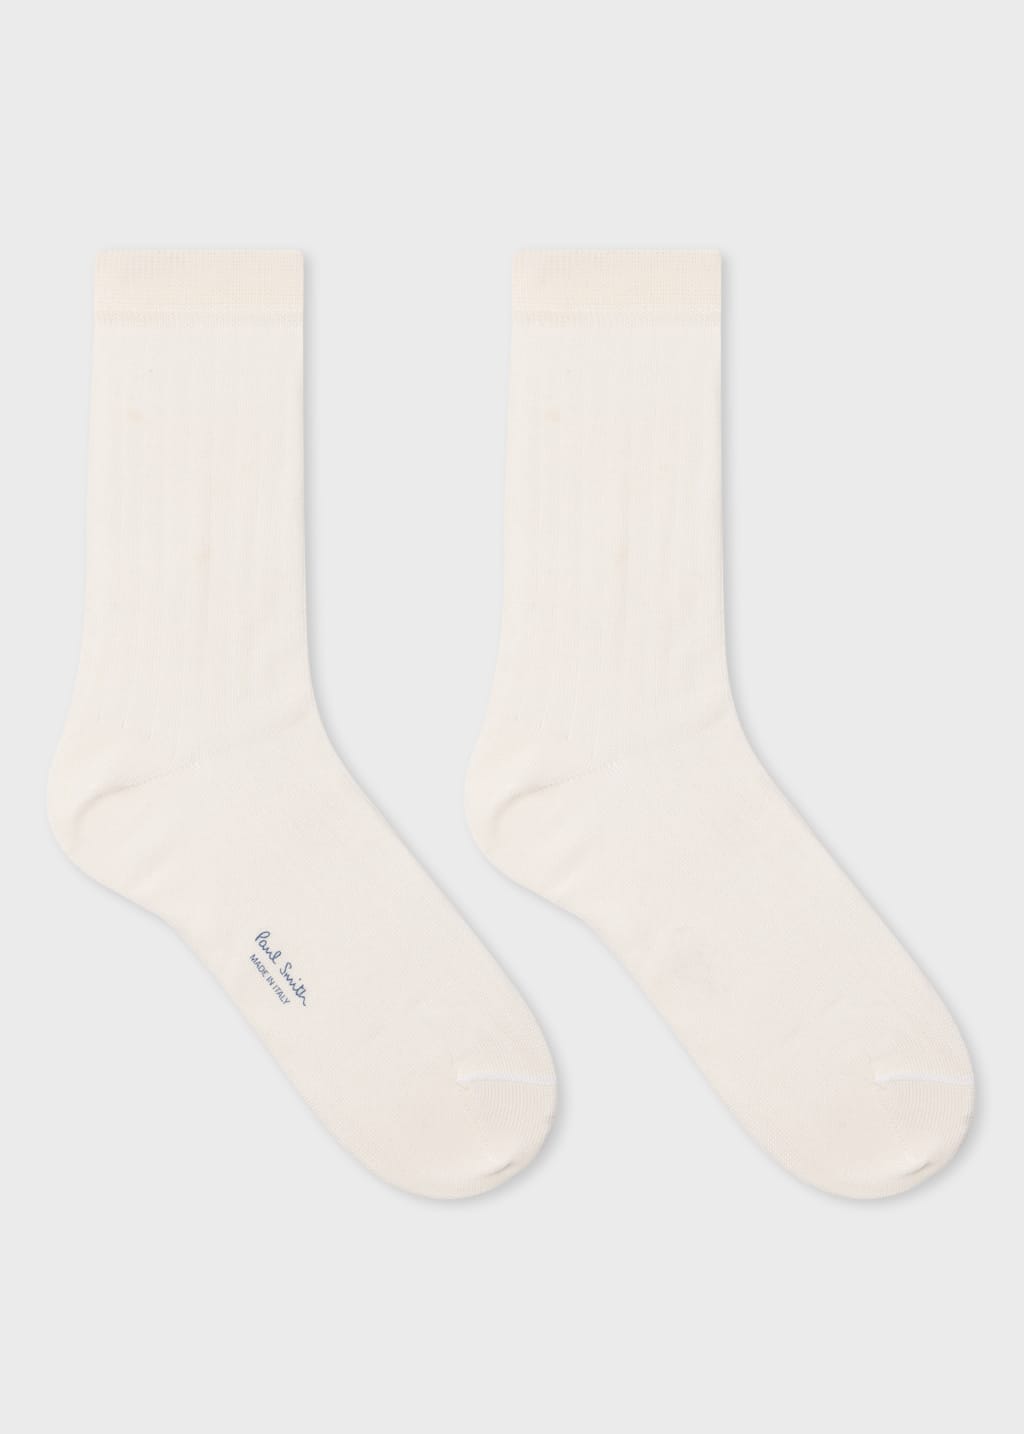 Pair View - Women's Ivory Ribbed Socks Paul Smith